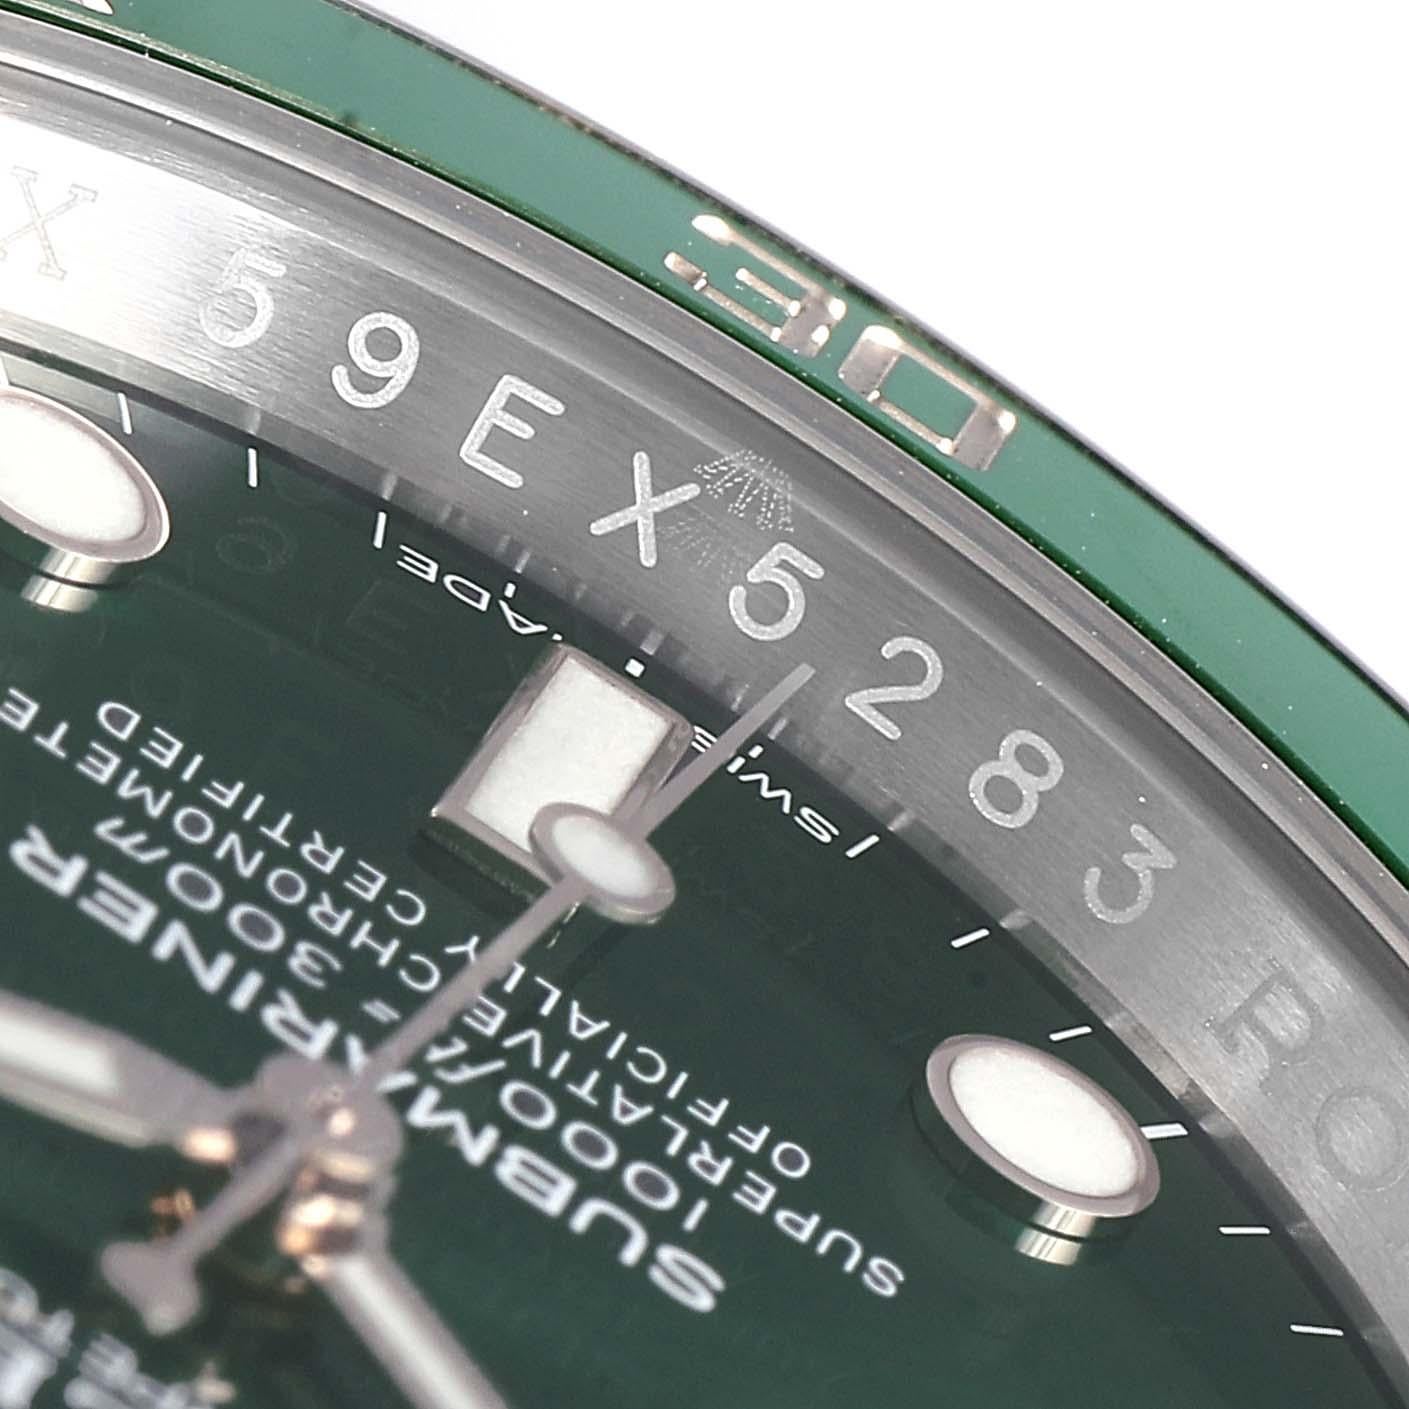 Rolex Submariner Hulk Green Dial Bezel Men's Watch 116610LV Box Card 3